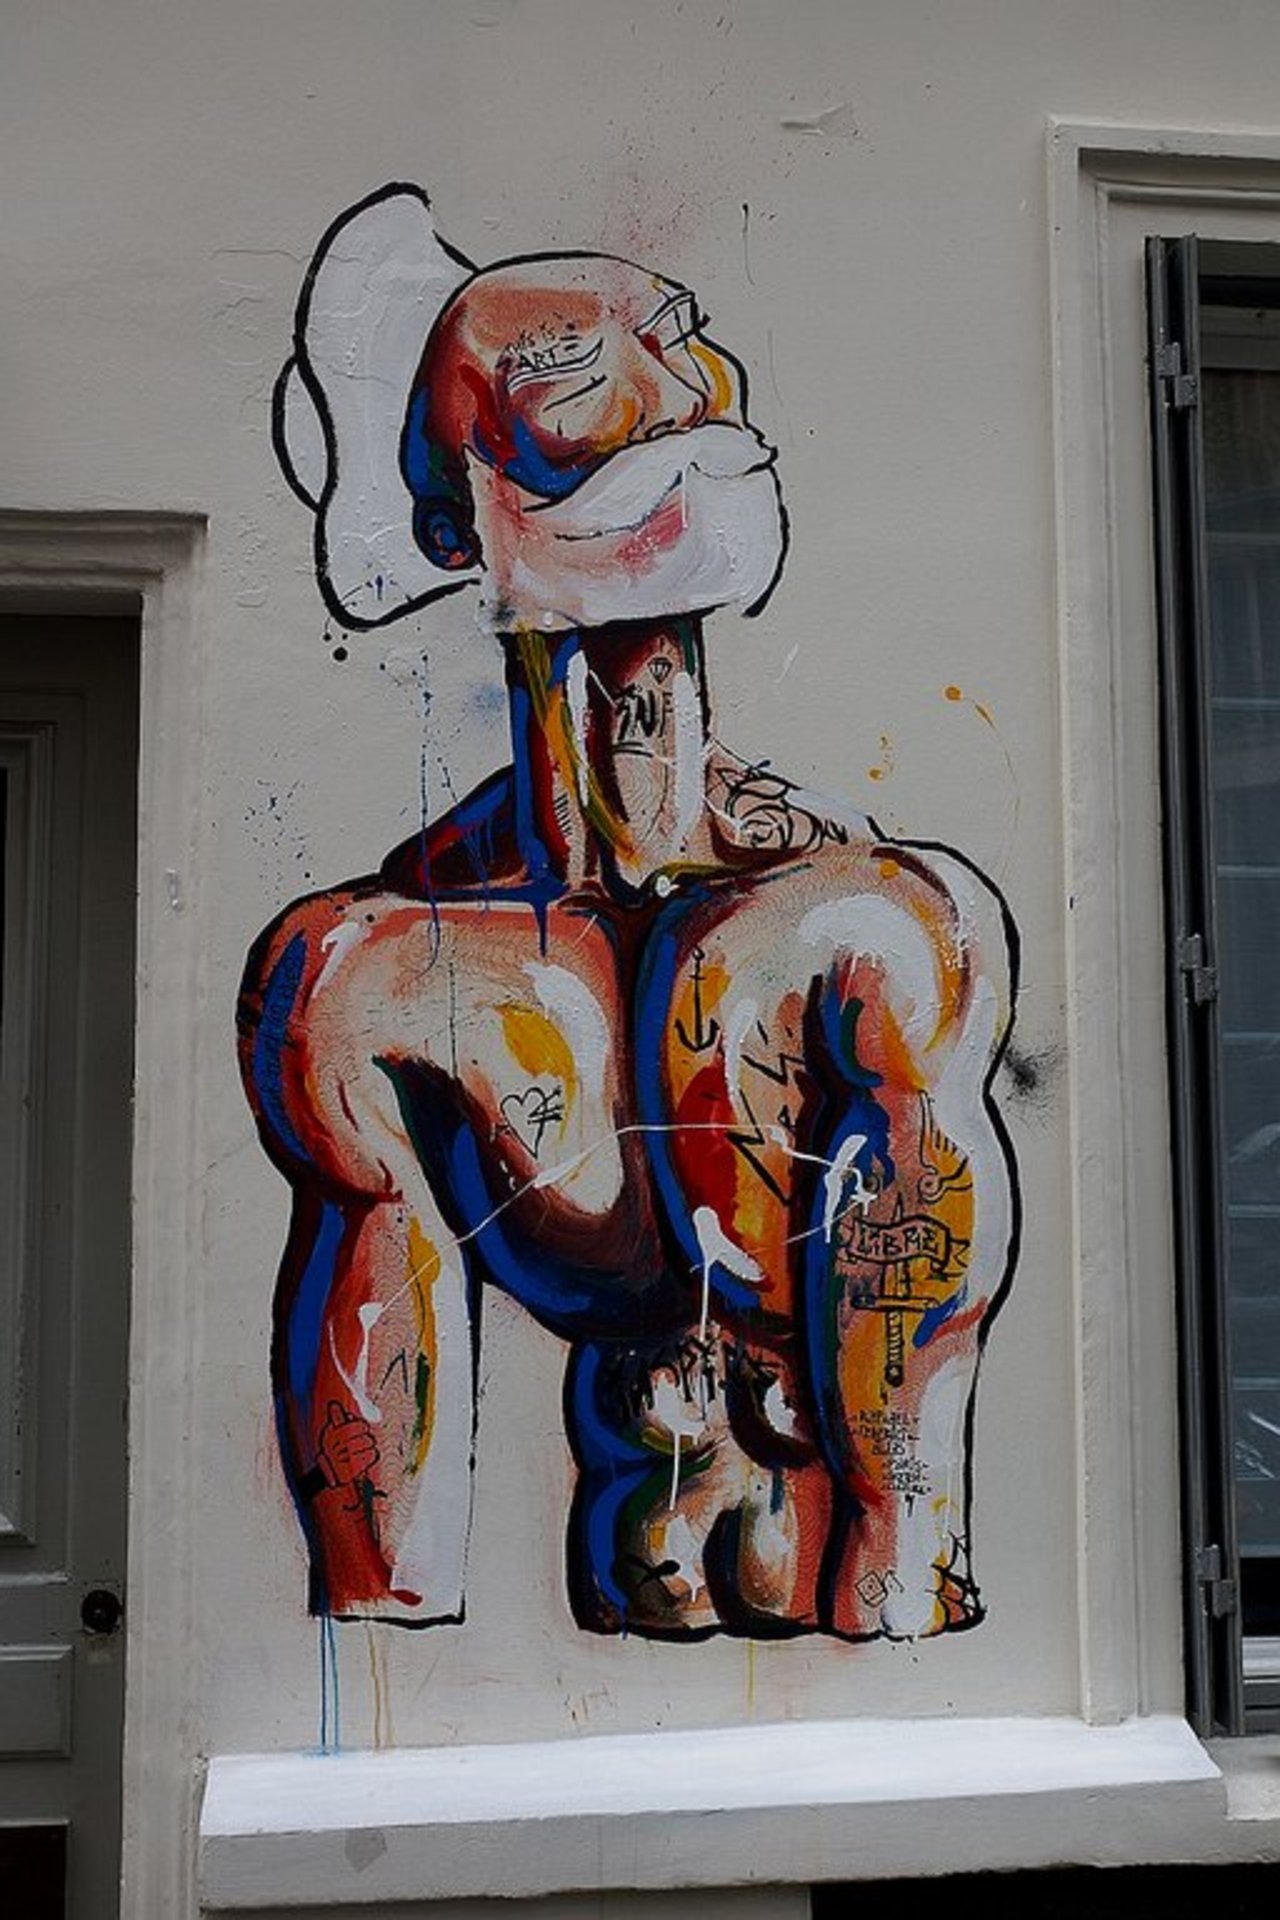 Street Art by anonymous in #Paris http://www.urbacolors.com #art #mural #graffiti #streetart https://t.co/w0SMXaKP0m